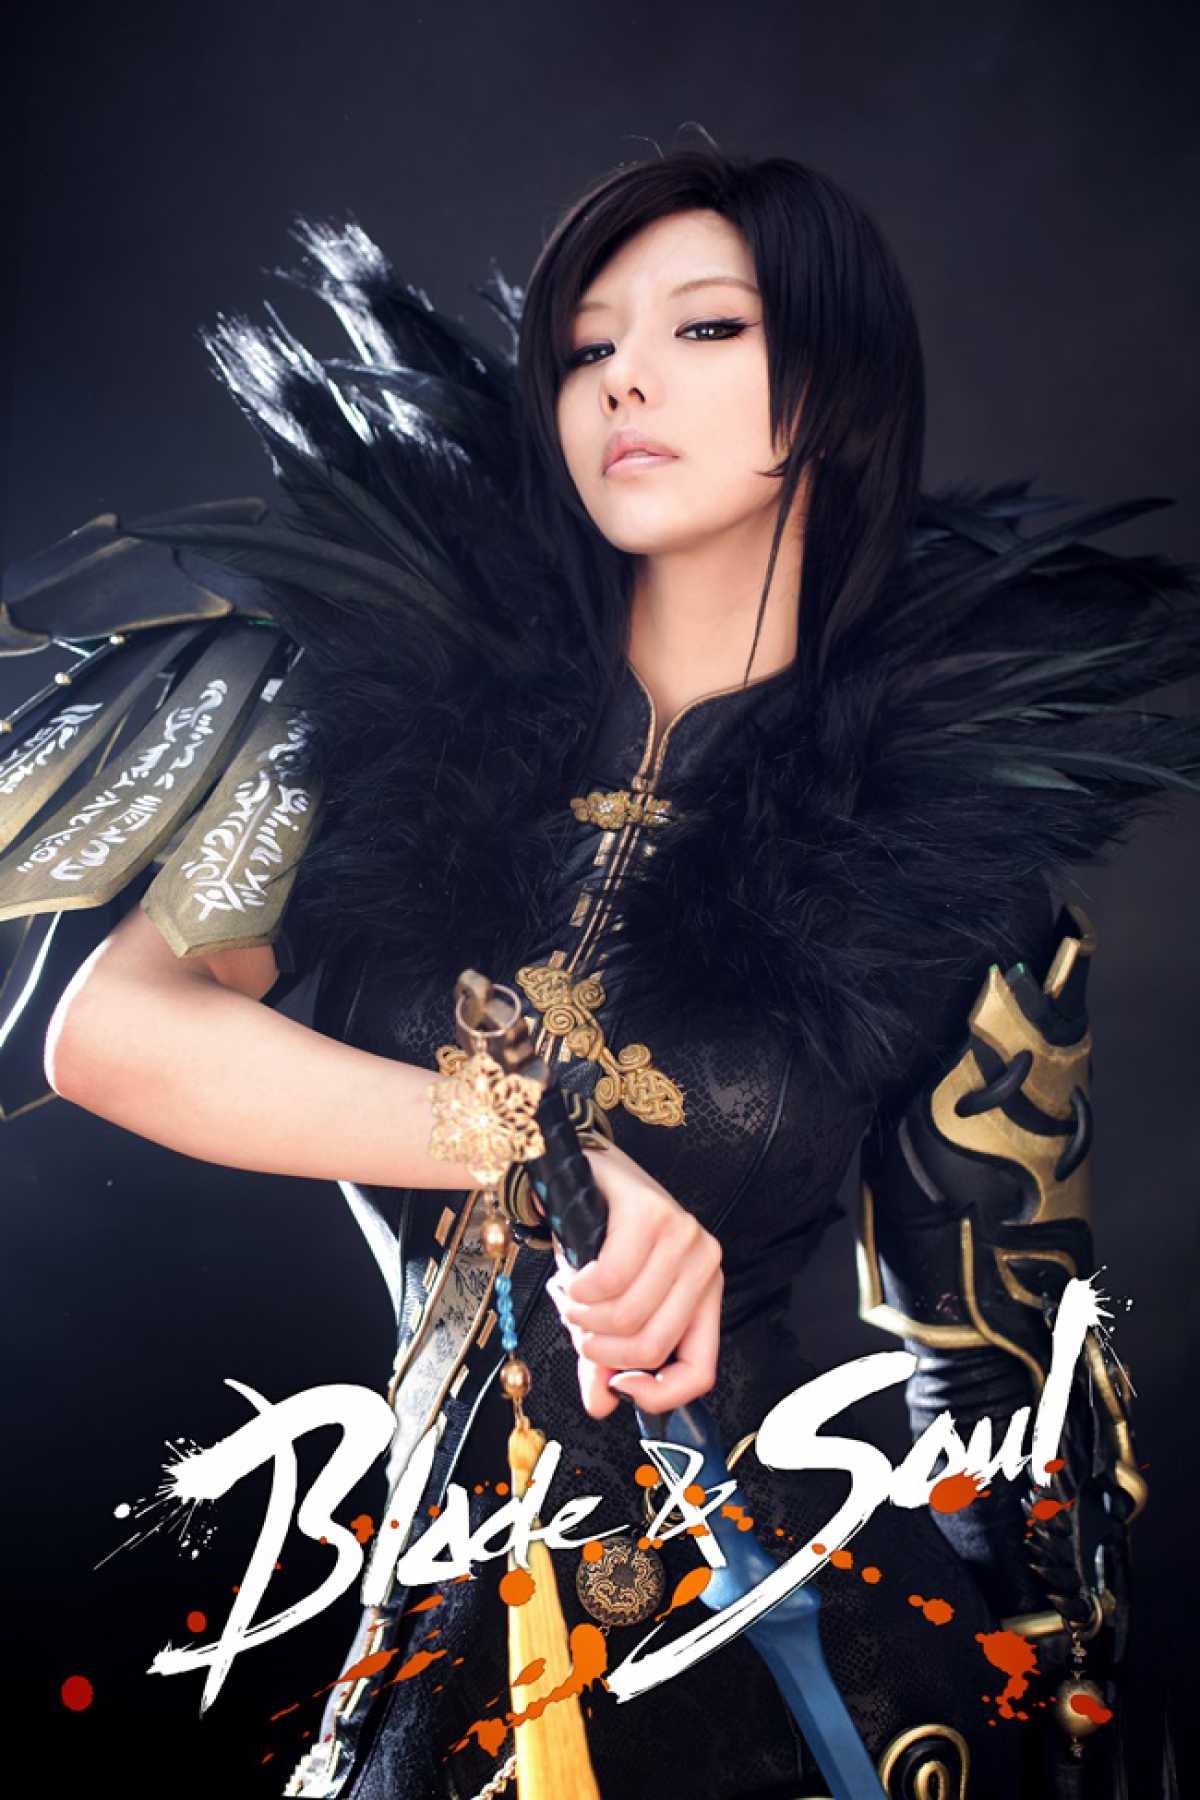 Косплей недели: Blade & Soul и злодейка Jin Seo Yeon